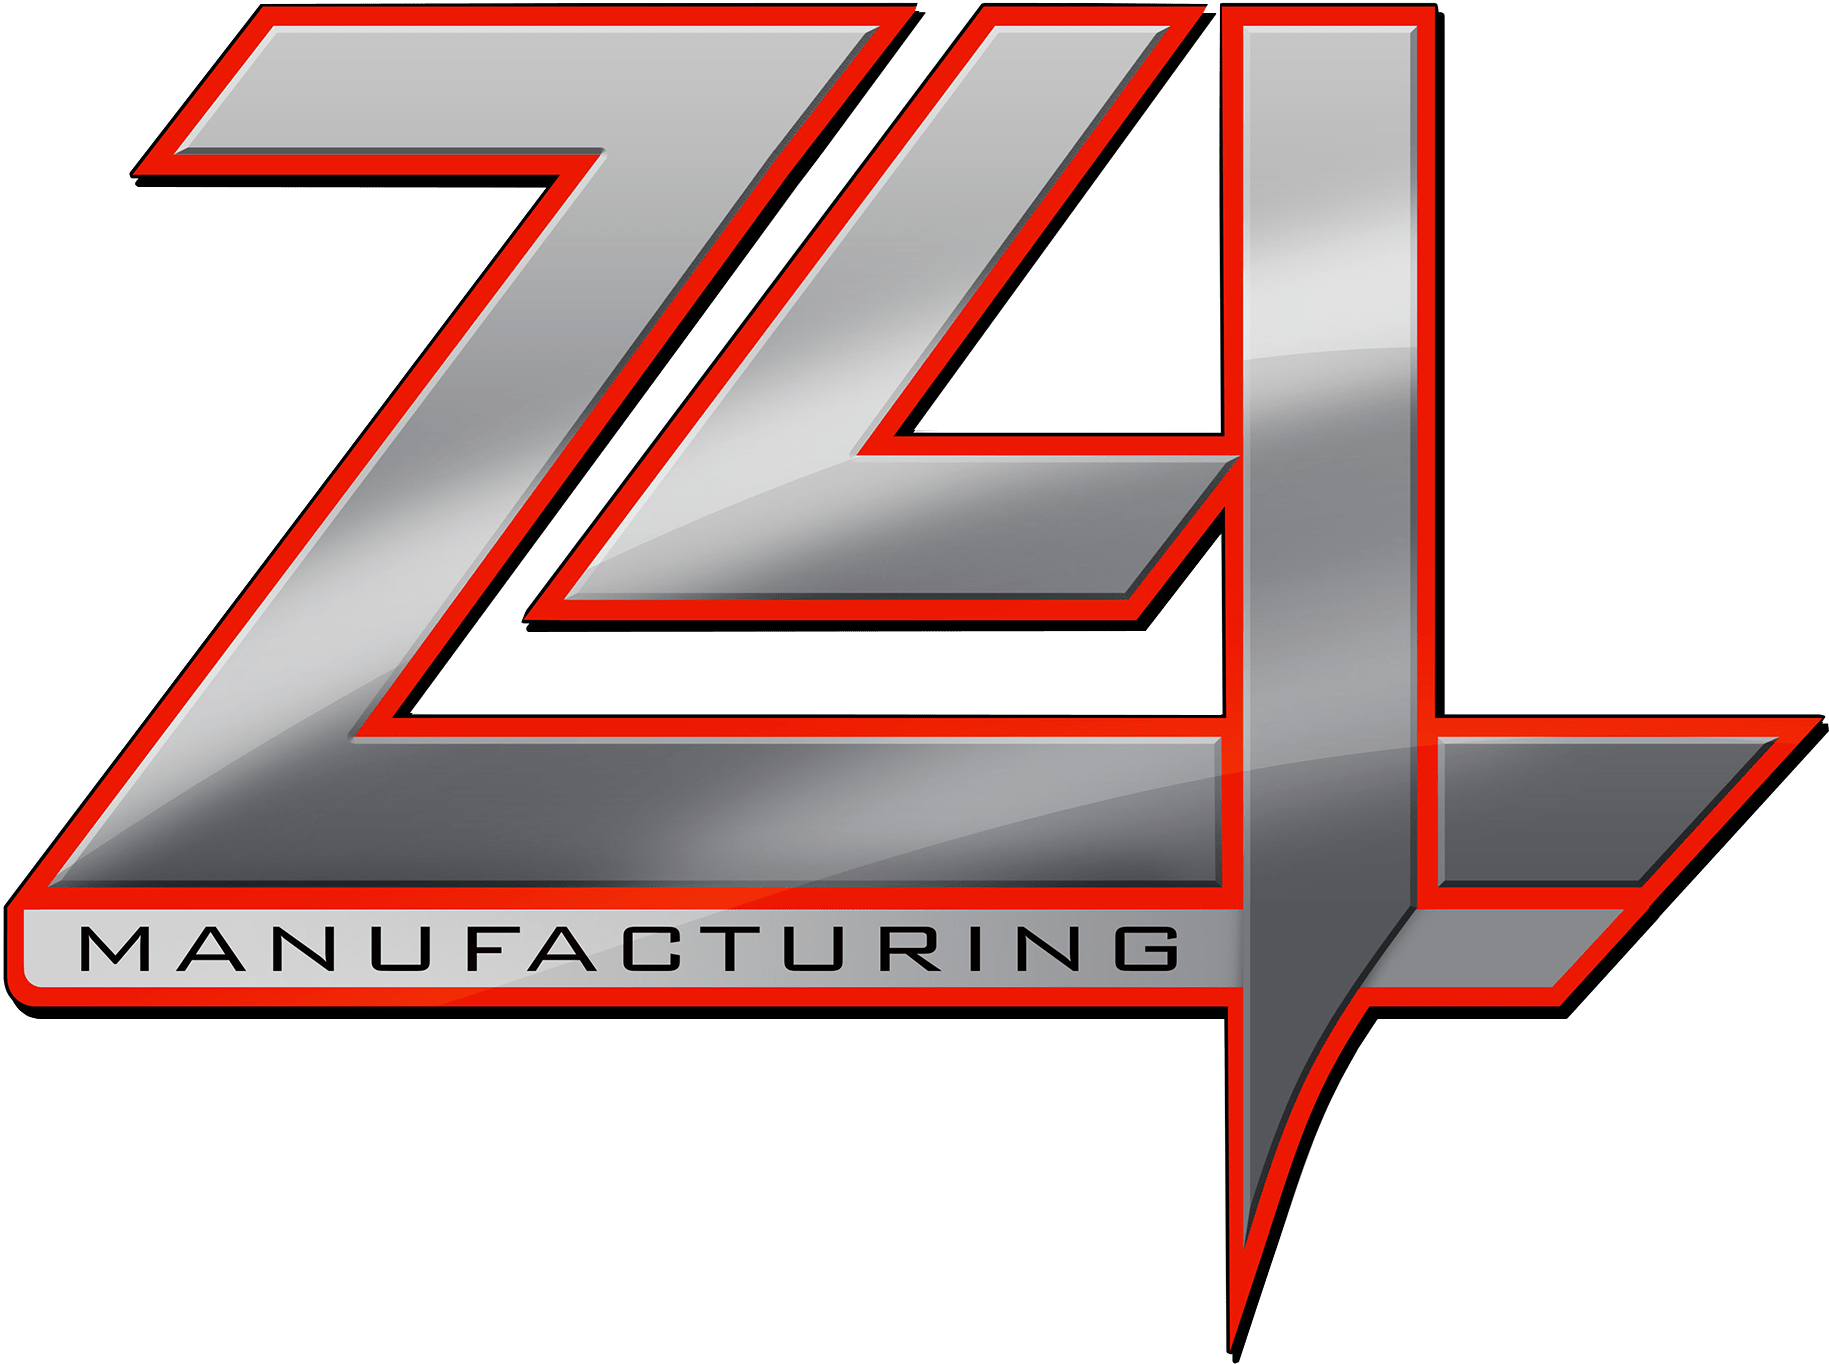 Z4 Manufacturing - Z4 Manufacturing (2100x1500)